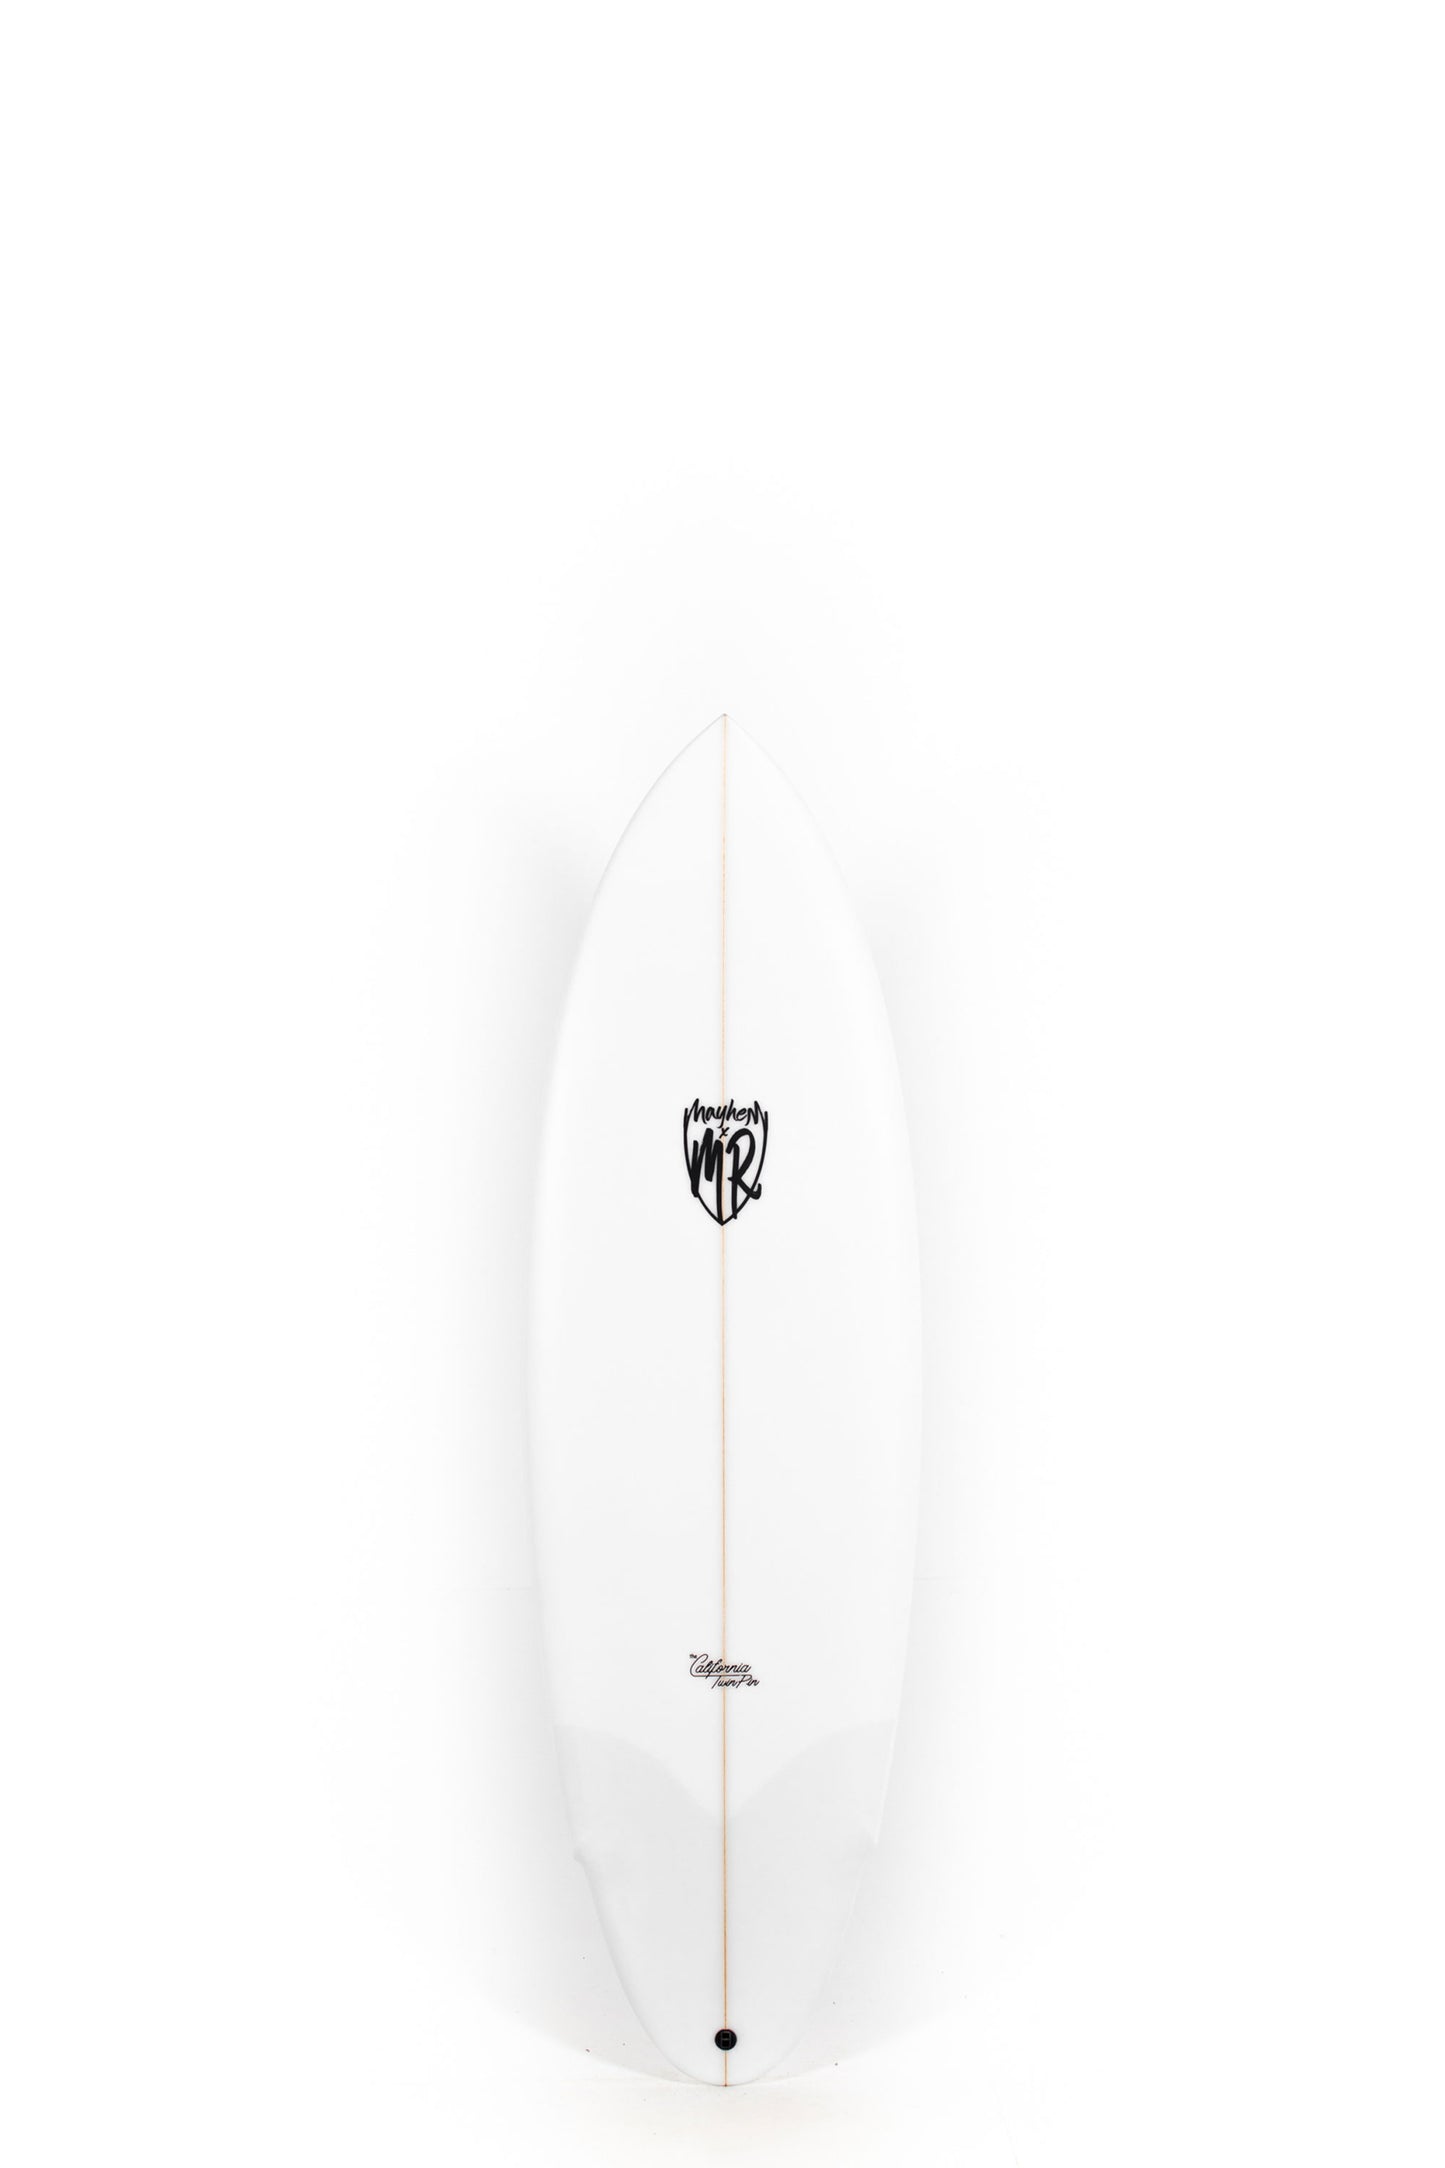 Pukas Surf shop - Lost Surfboards - CALIFORNIA TWIN PIN by Matt Biolos - 5'9" x 20,38 x 2,50 - 32L - MM00651